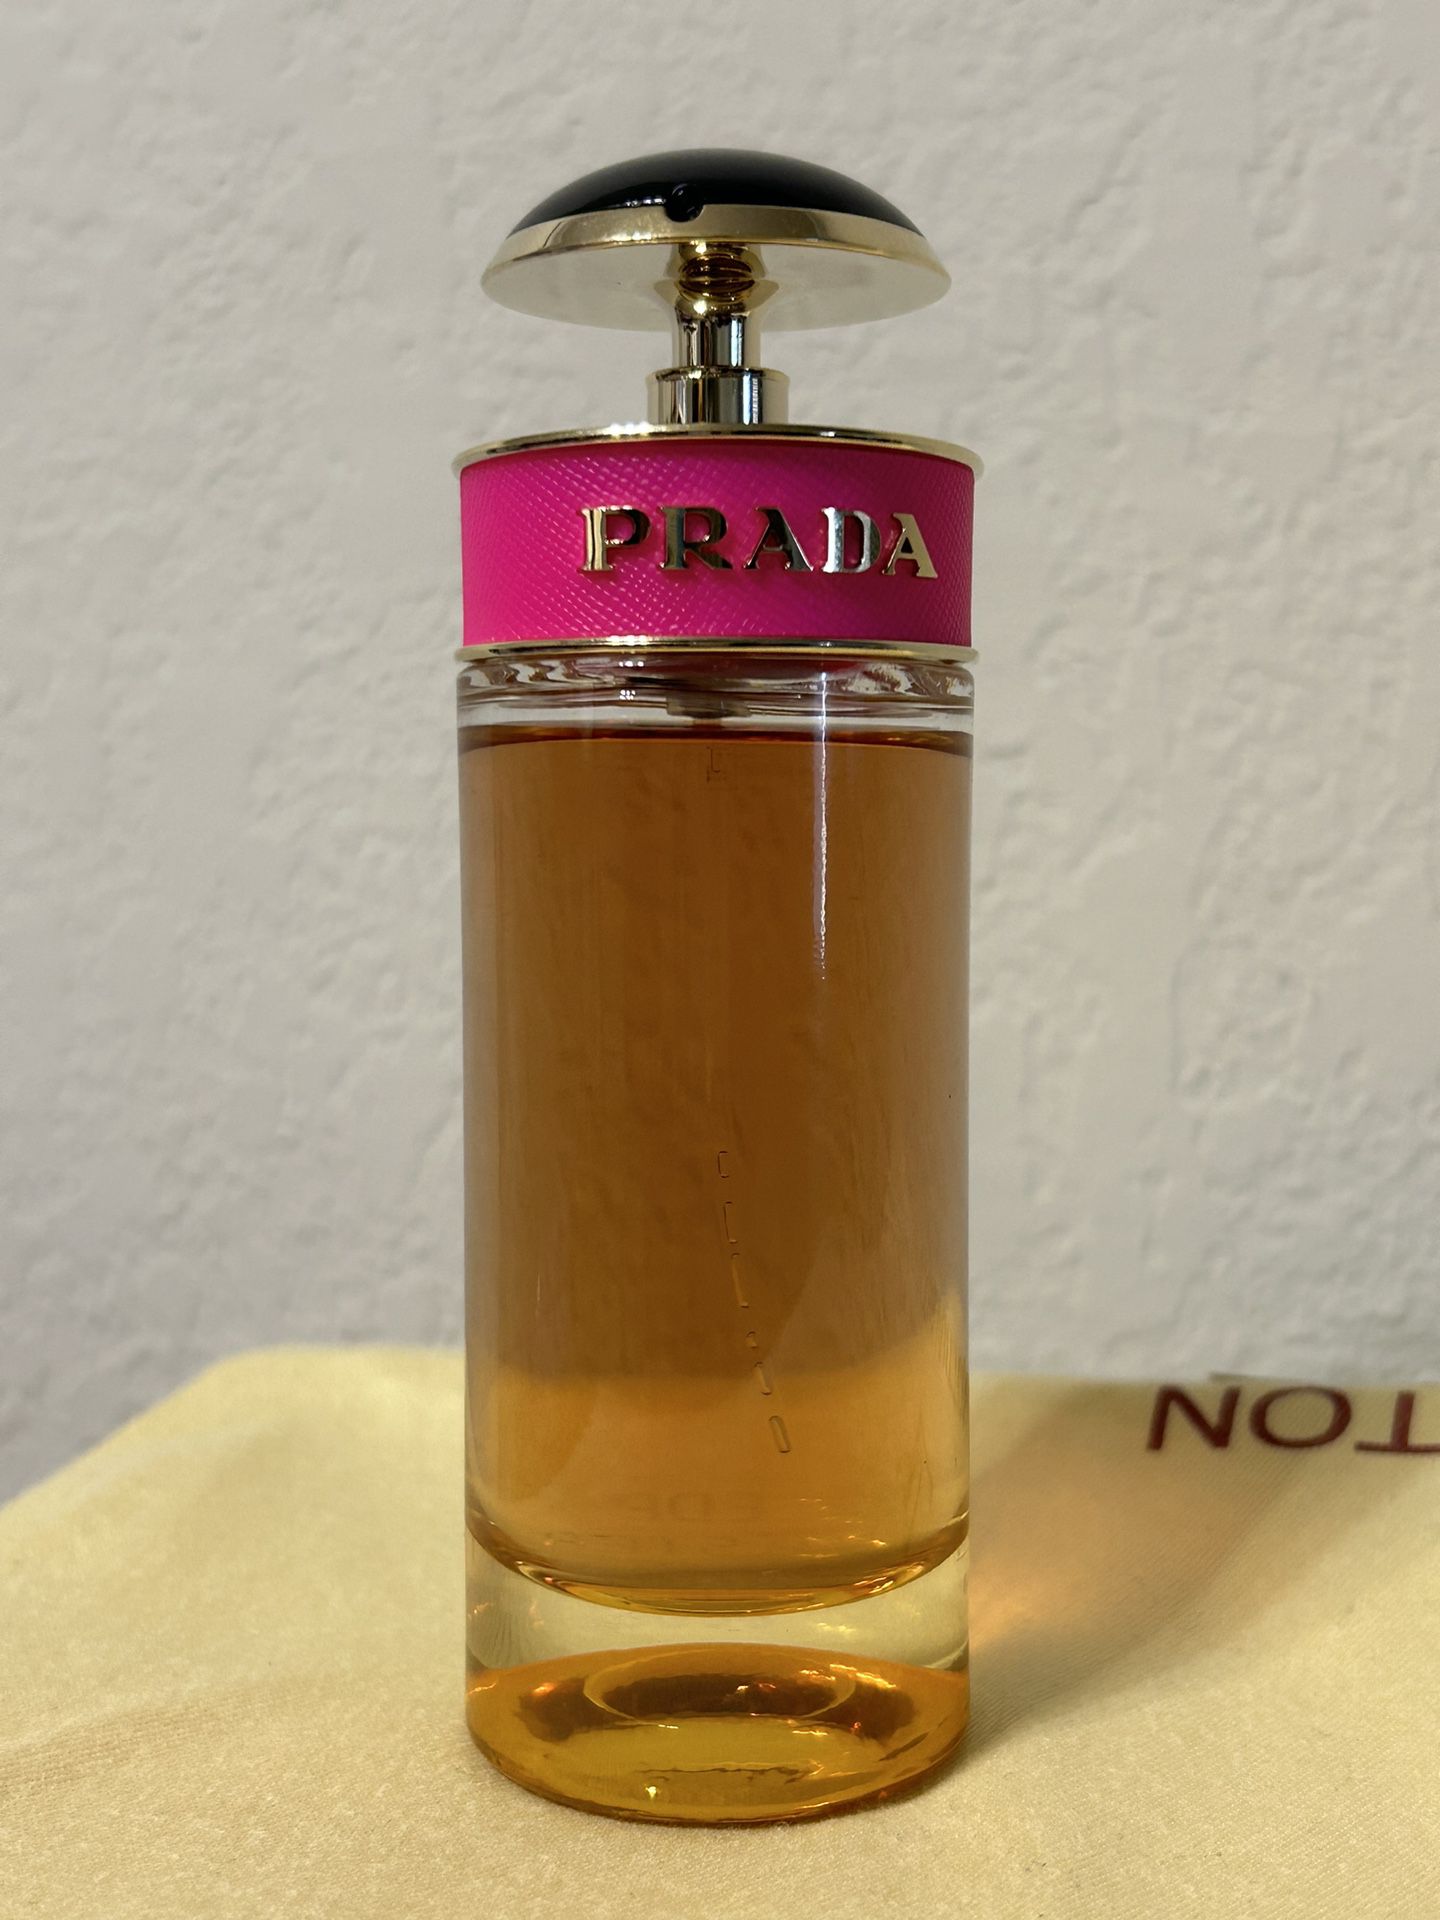 Prada Women’s Perfume 2.7oz